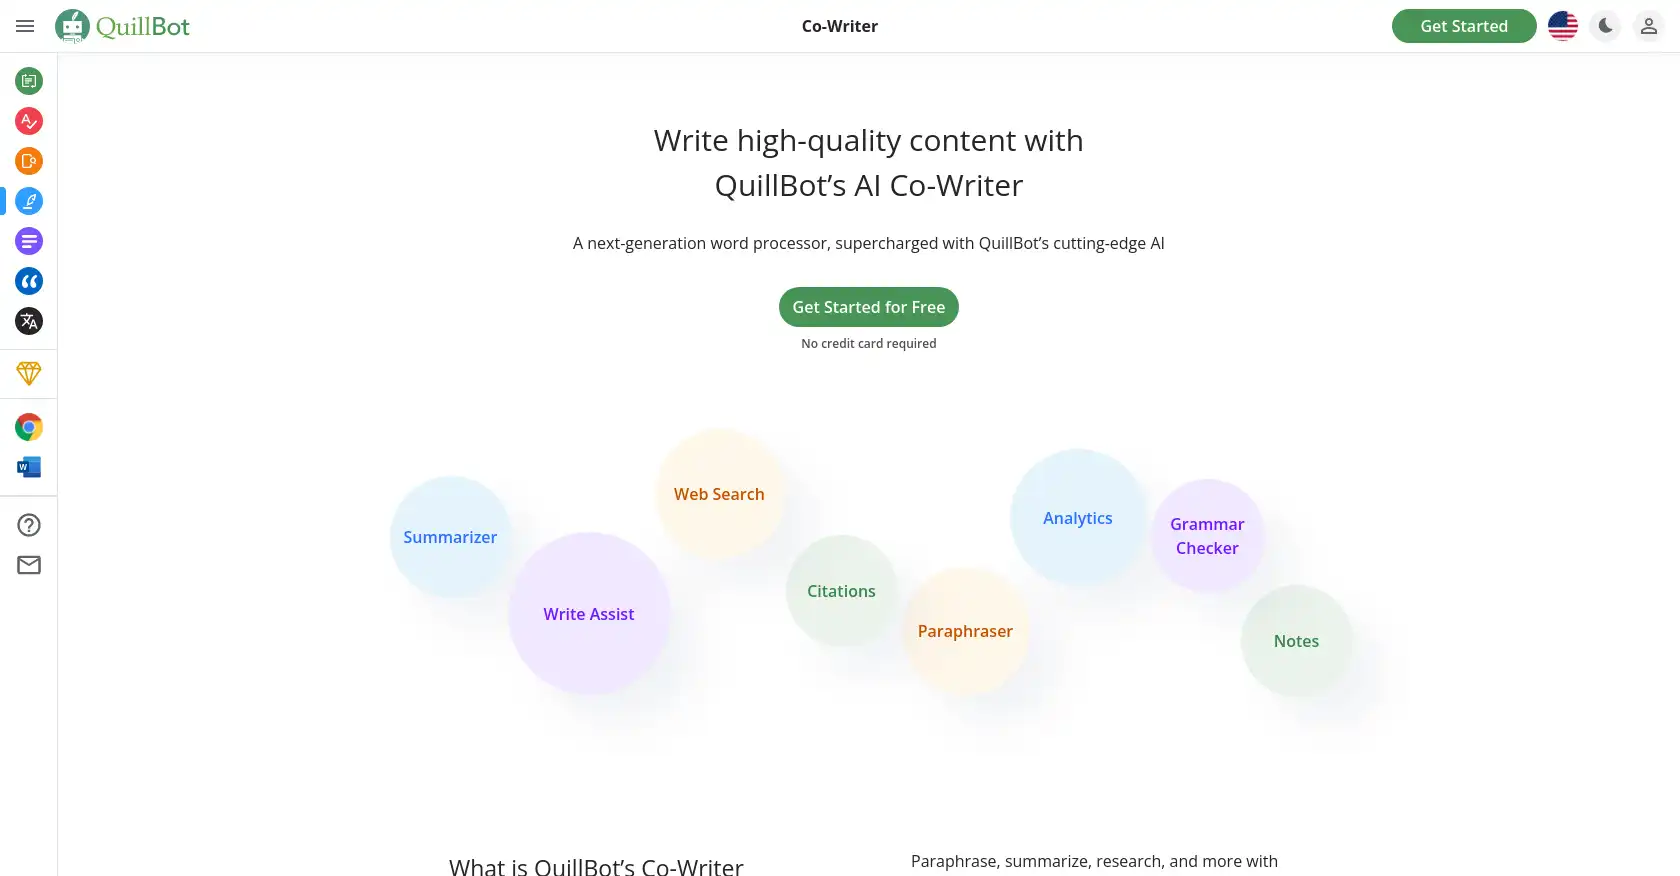 Quillbot Co-Writer - AI tool for Writing, Summarizing, Paraphrasing, Grammar checking